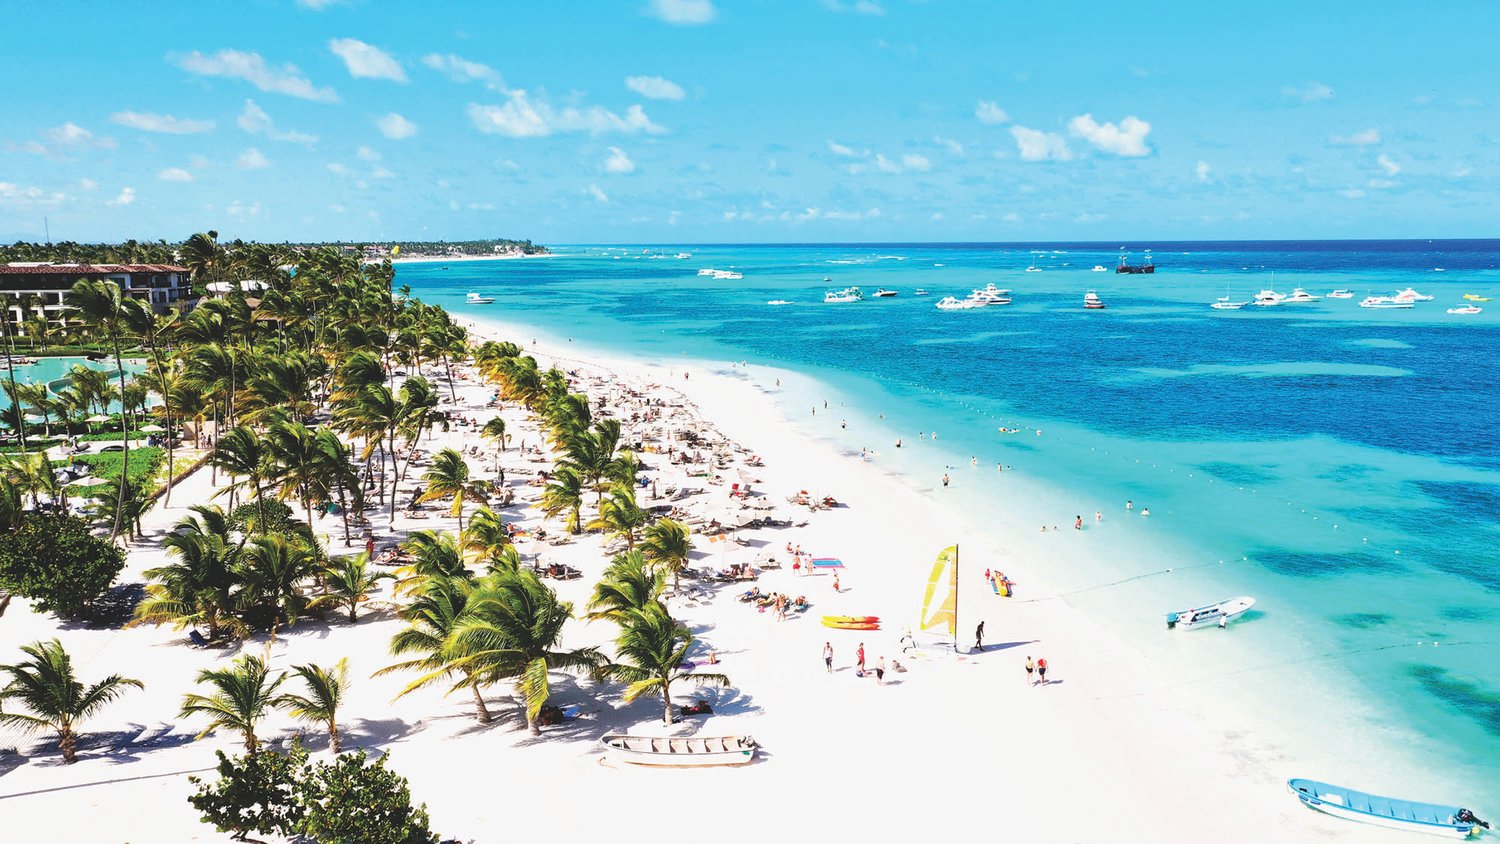 Aerial view of a beautiful Caribbean beach in Punta Cana, Dominican Republic.